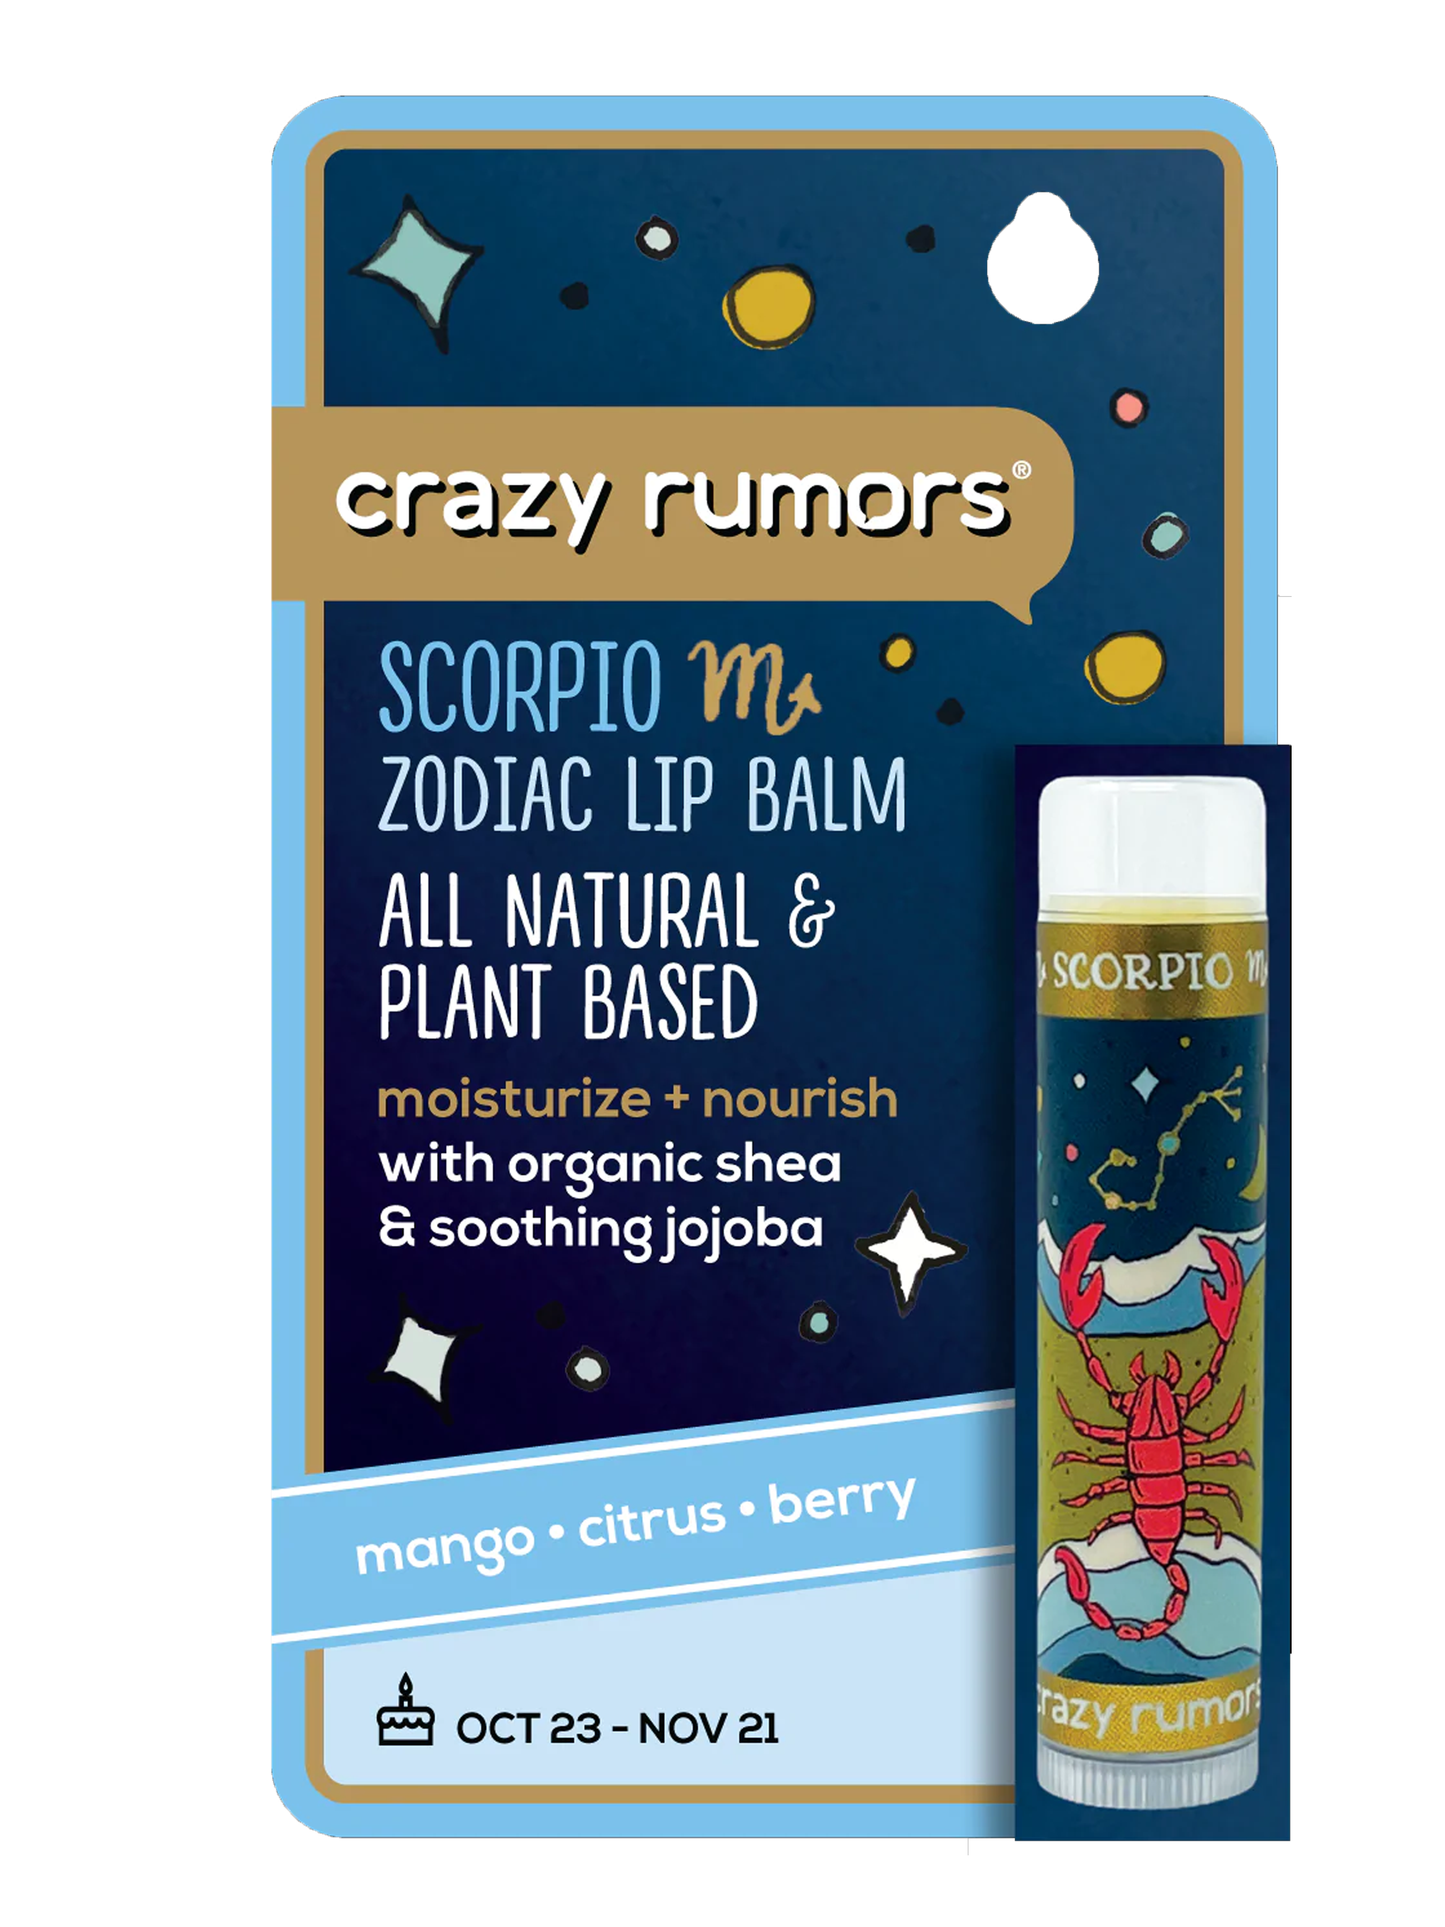 Crazy Rumors - Scorpio, Zodiac Lip Balm